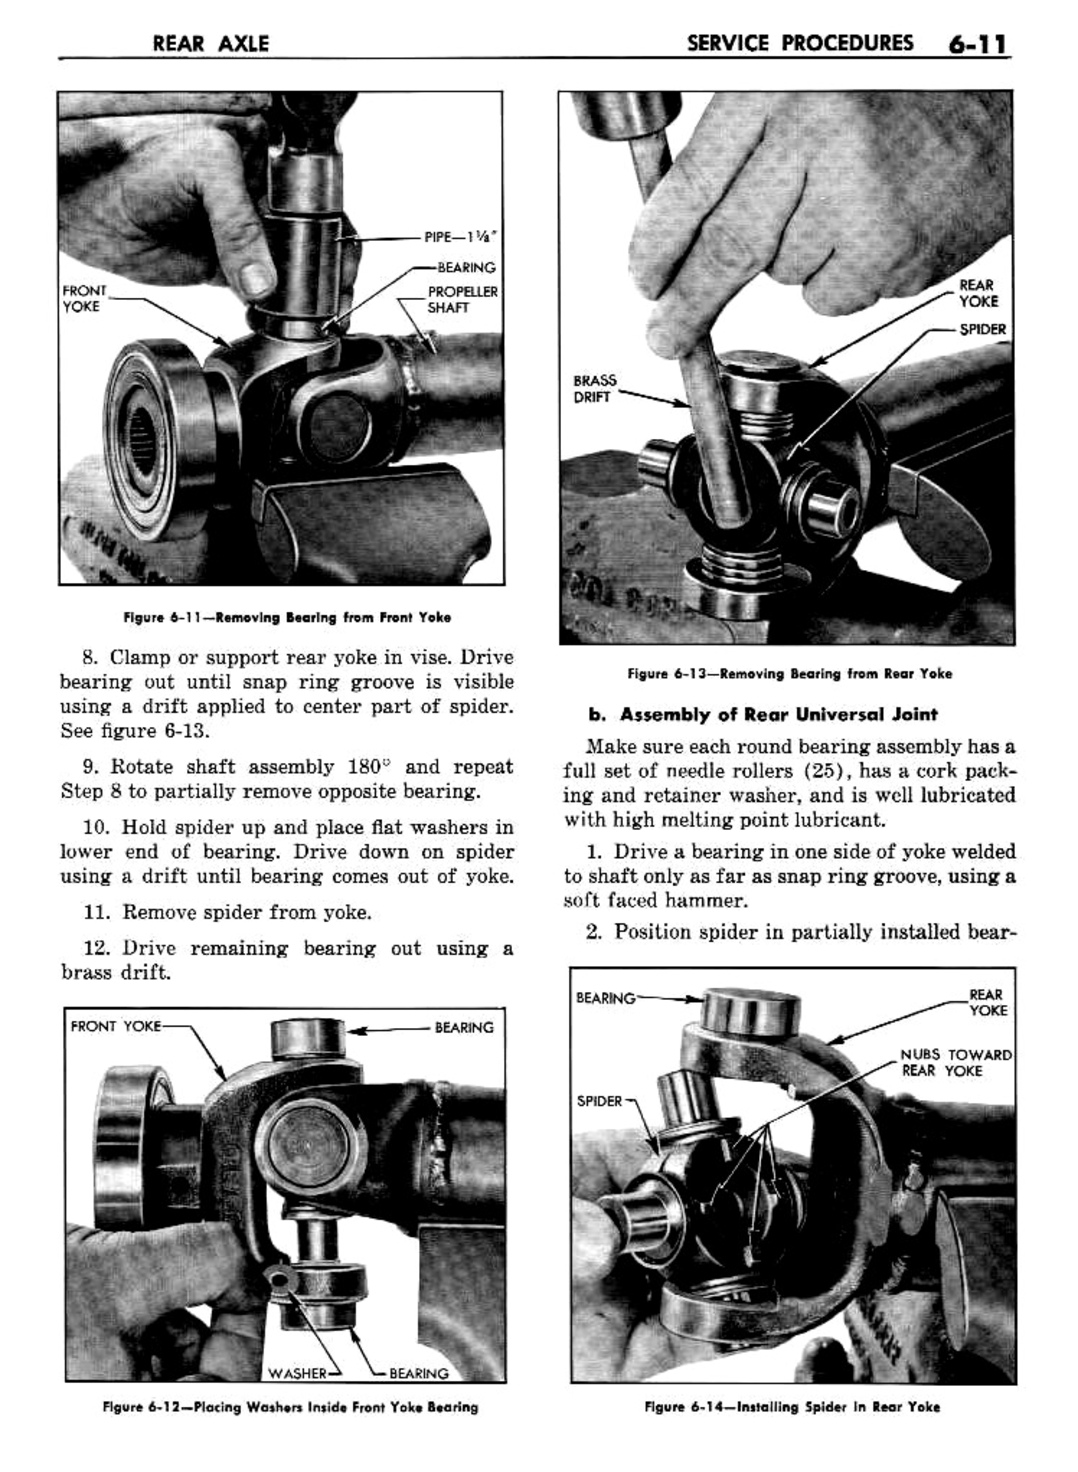 n_07 1957 Buick Shop Manual - Rear Axle-011-011.jpg